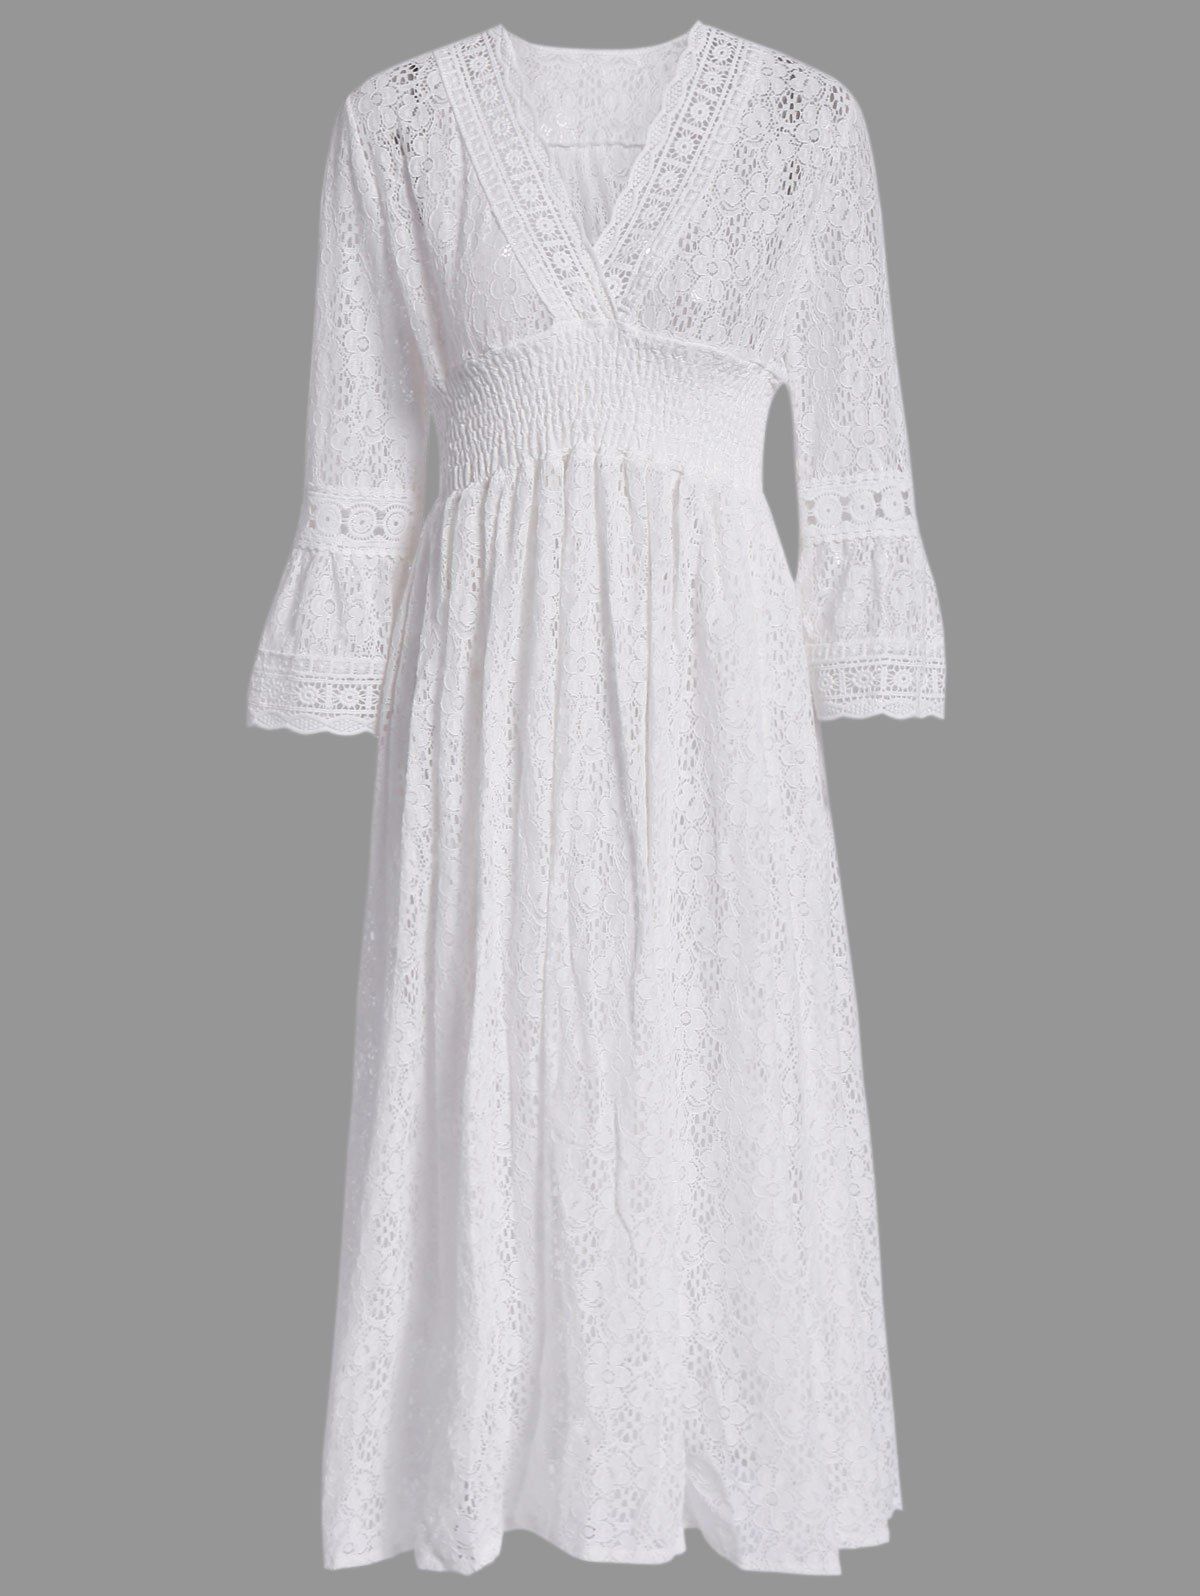 [55% OFF] Ladylike V-Neck White 3/4 Sleeve Lace Dress For Women | Rosegal